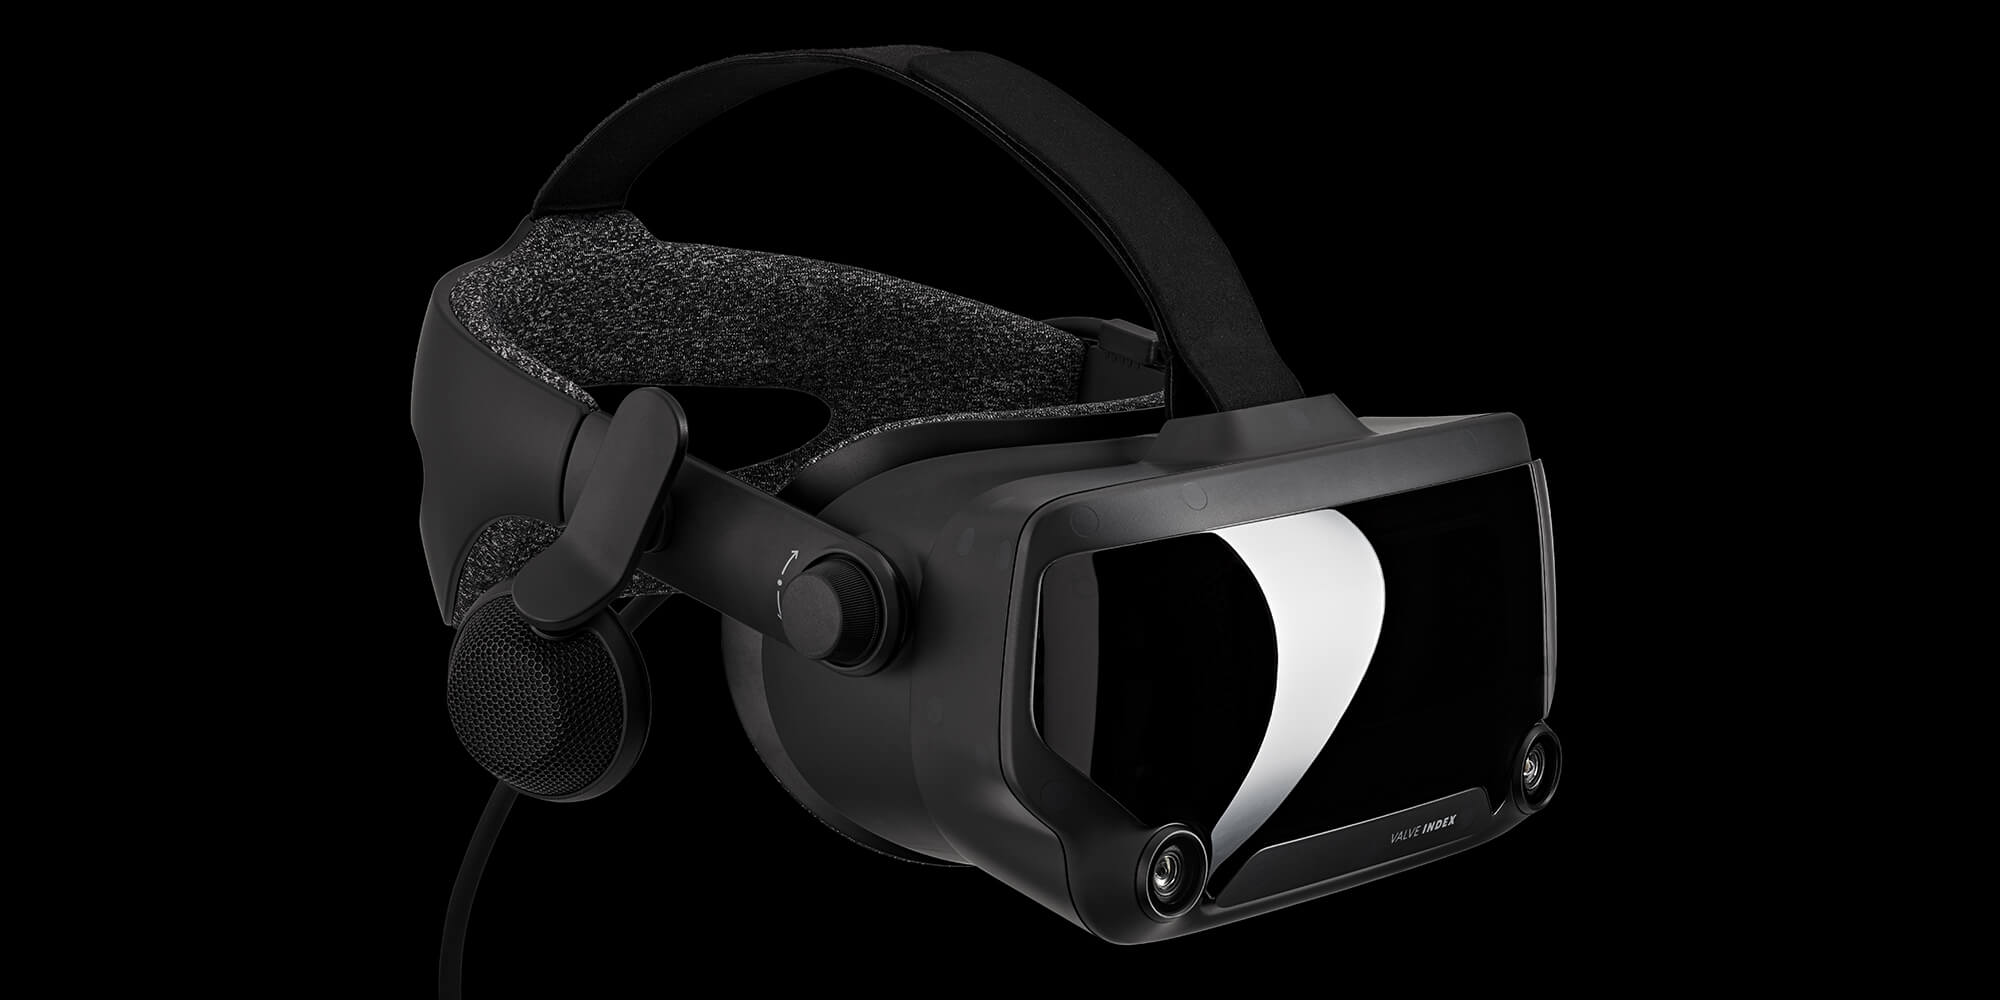 uberørt krig Rettsmedicin Valve Index VR Headset: 1440×1600 per Eye and 120/144 Hz LCDs